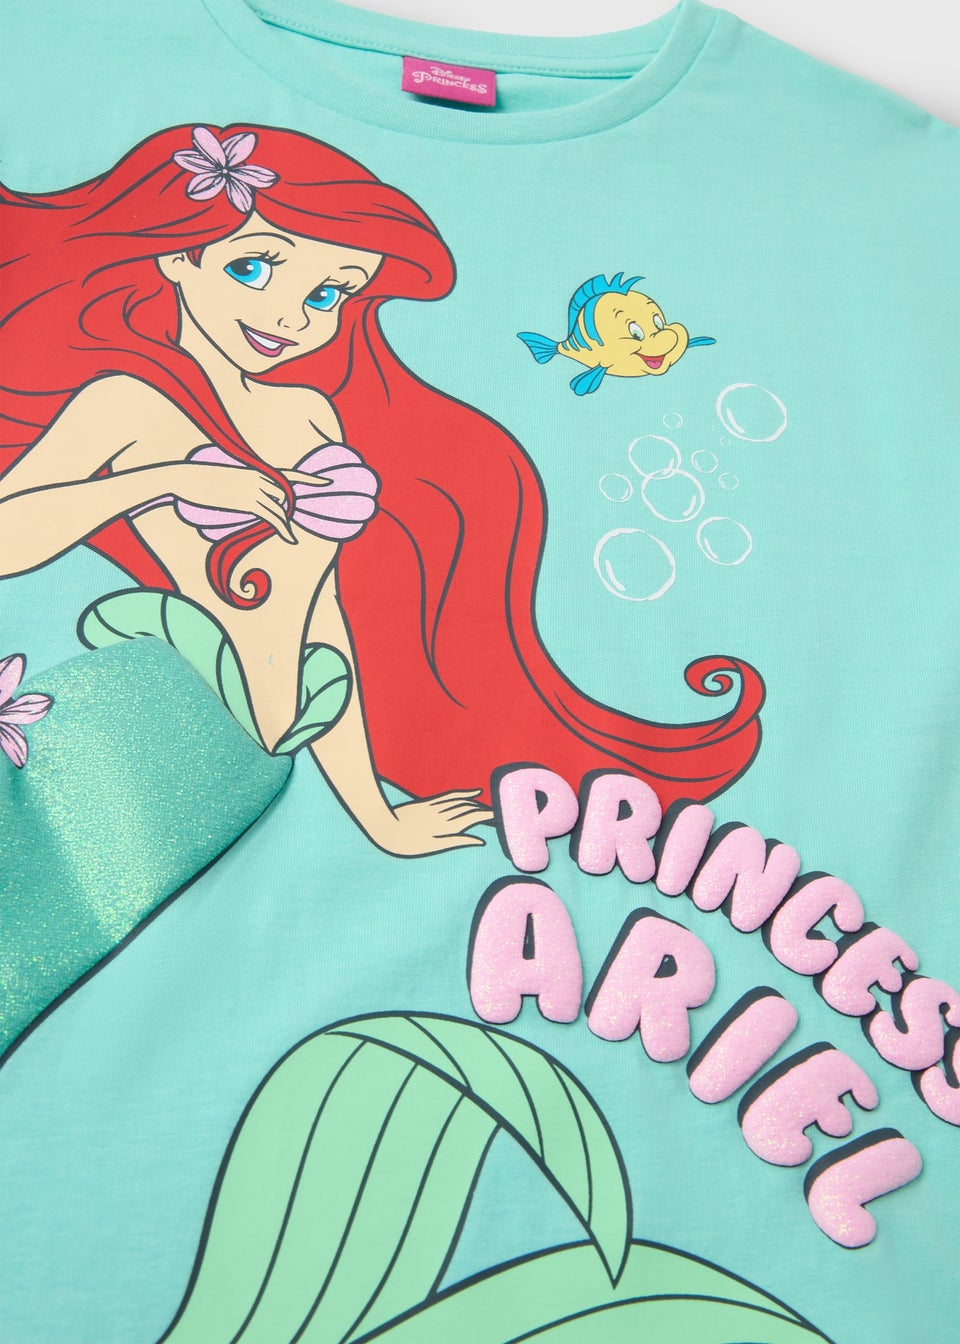 Disney Girls Blue Princess Ariel T-Shirt (1-8yrs)